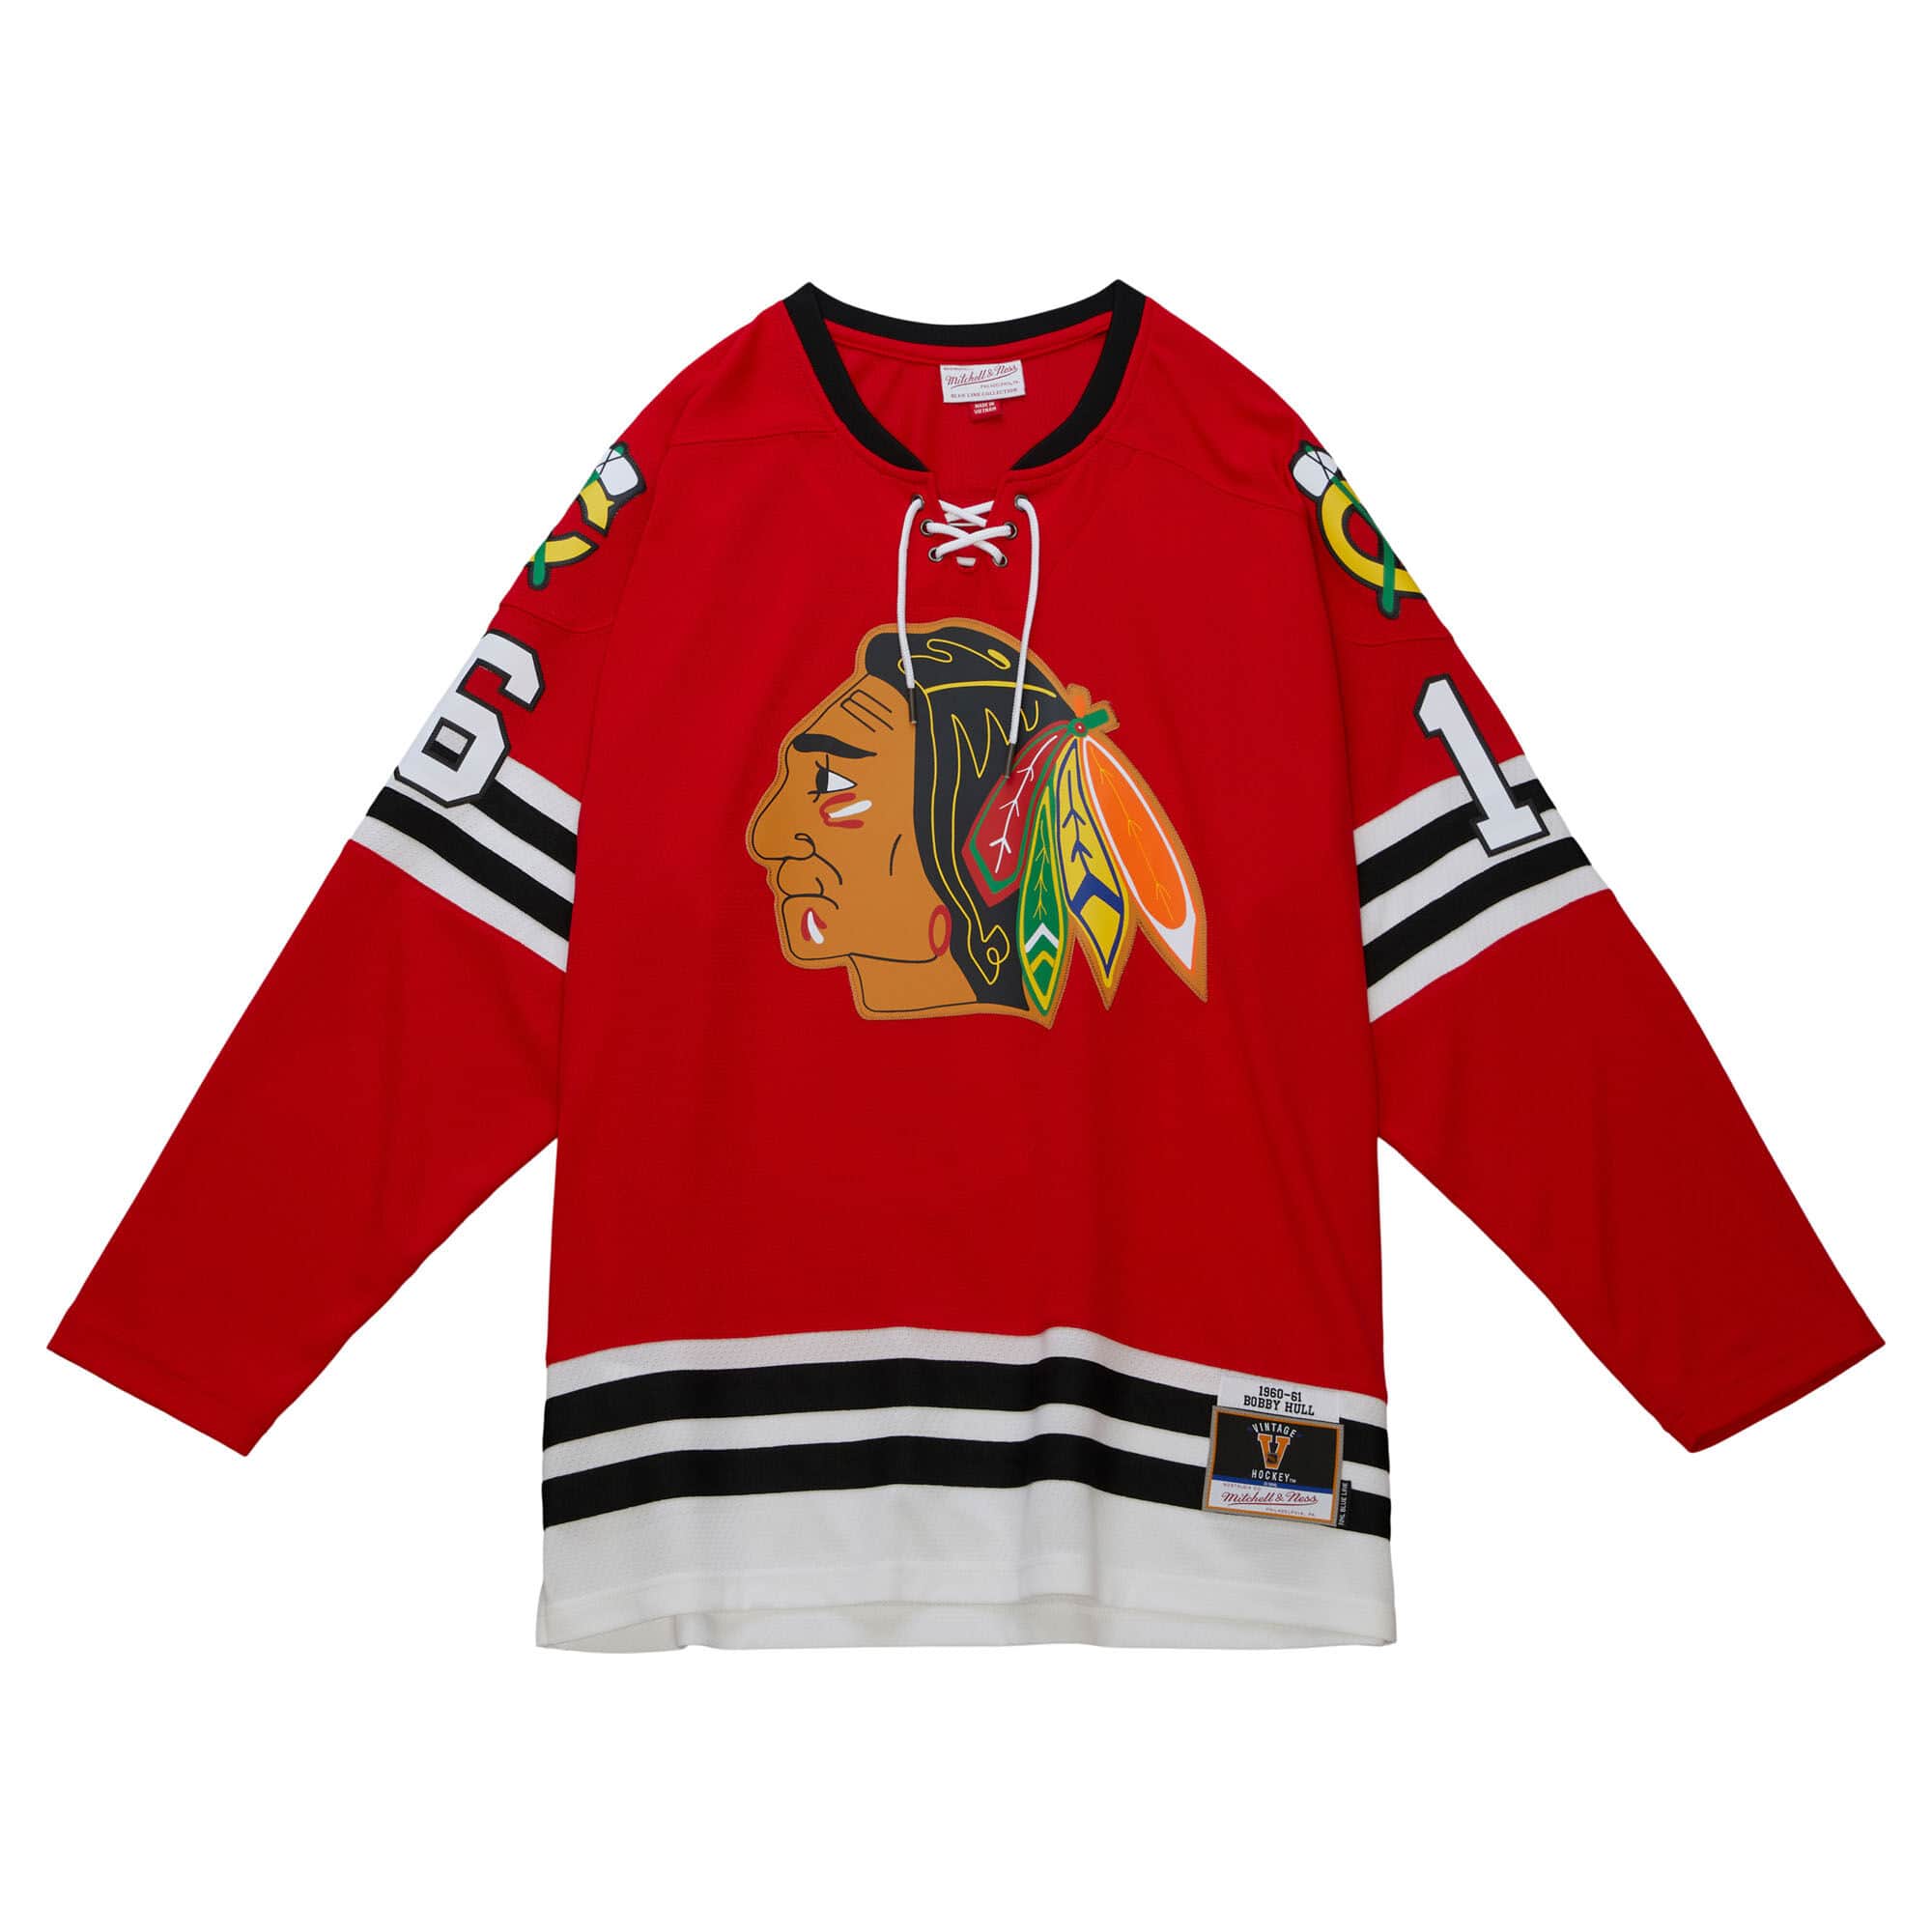 Blackhawks hockey jersey - Gem